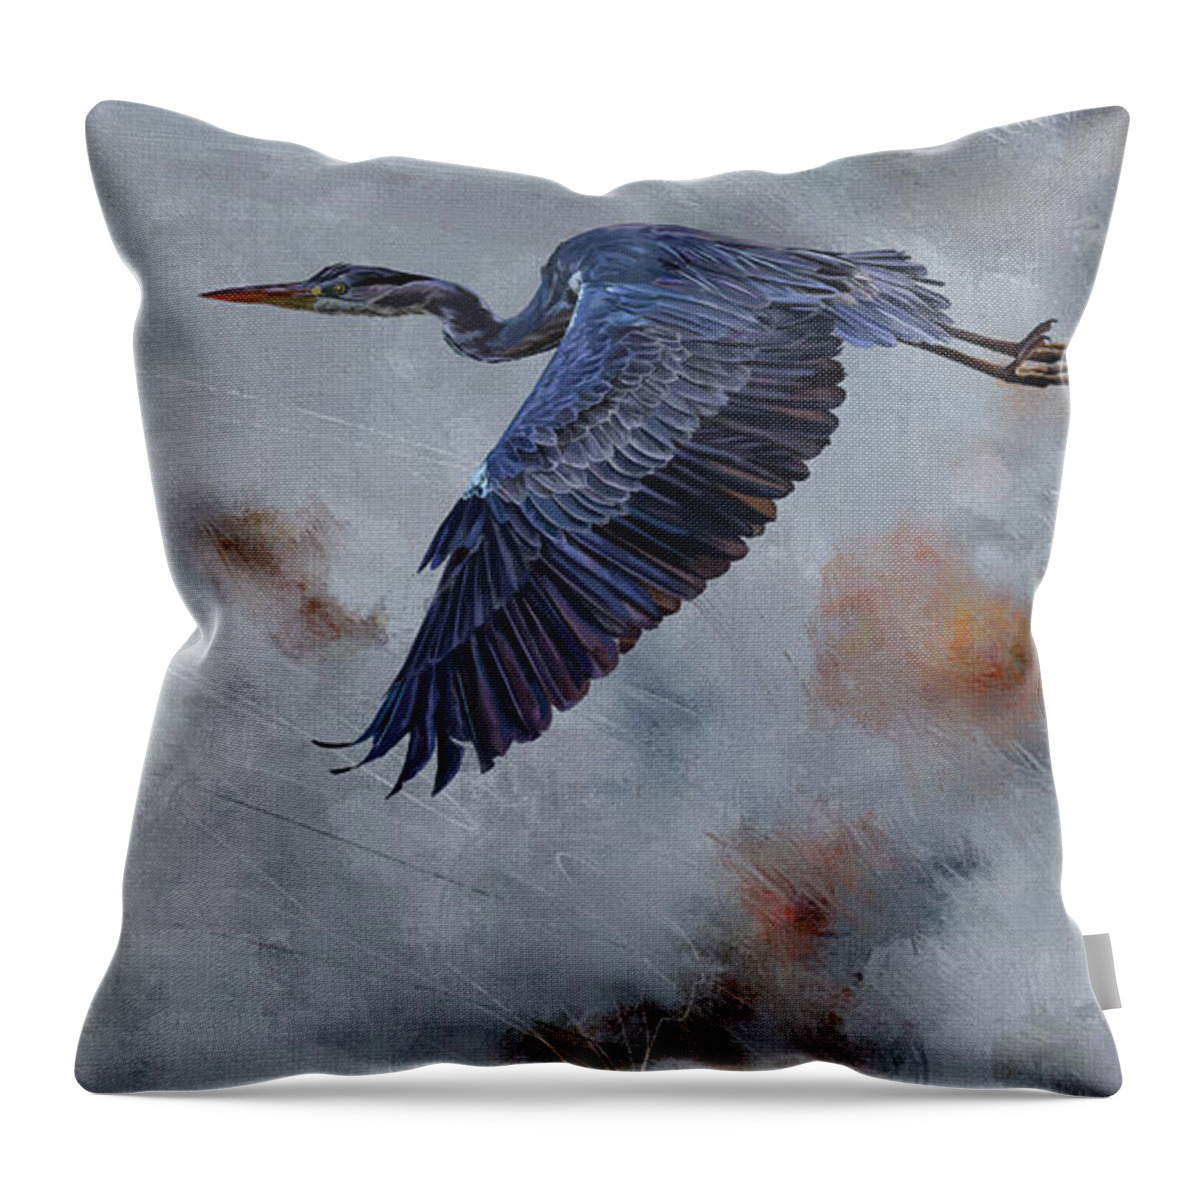 Bird Throw Pillow featuring the digital art Blue Heron in Flight by Shawn Conn